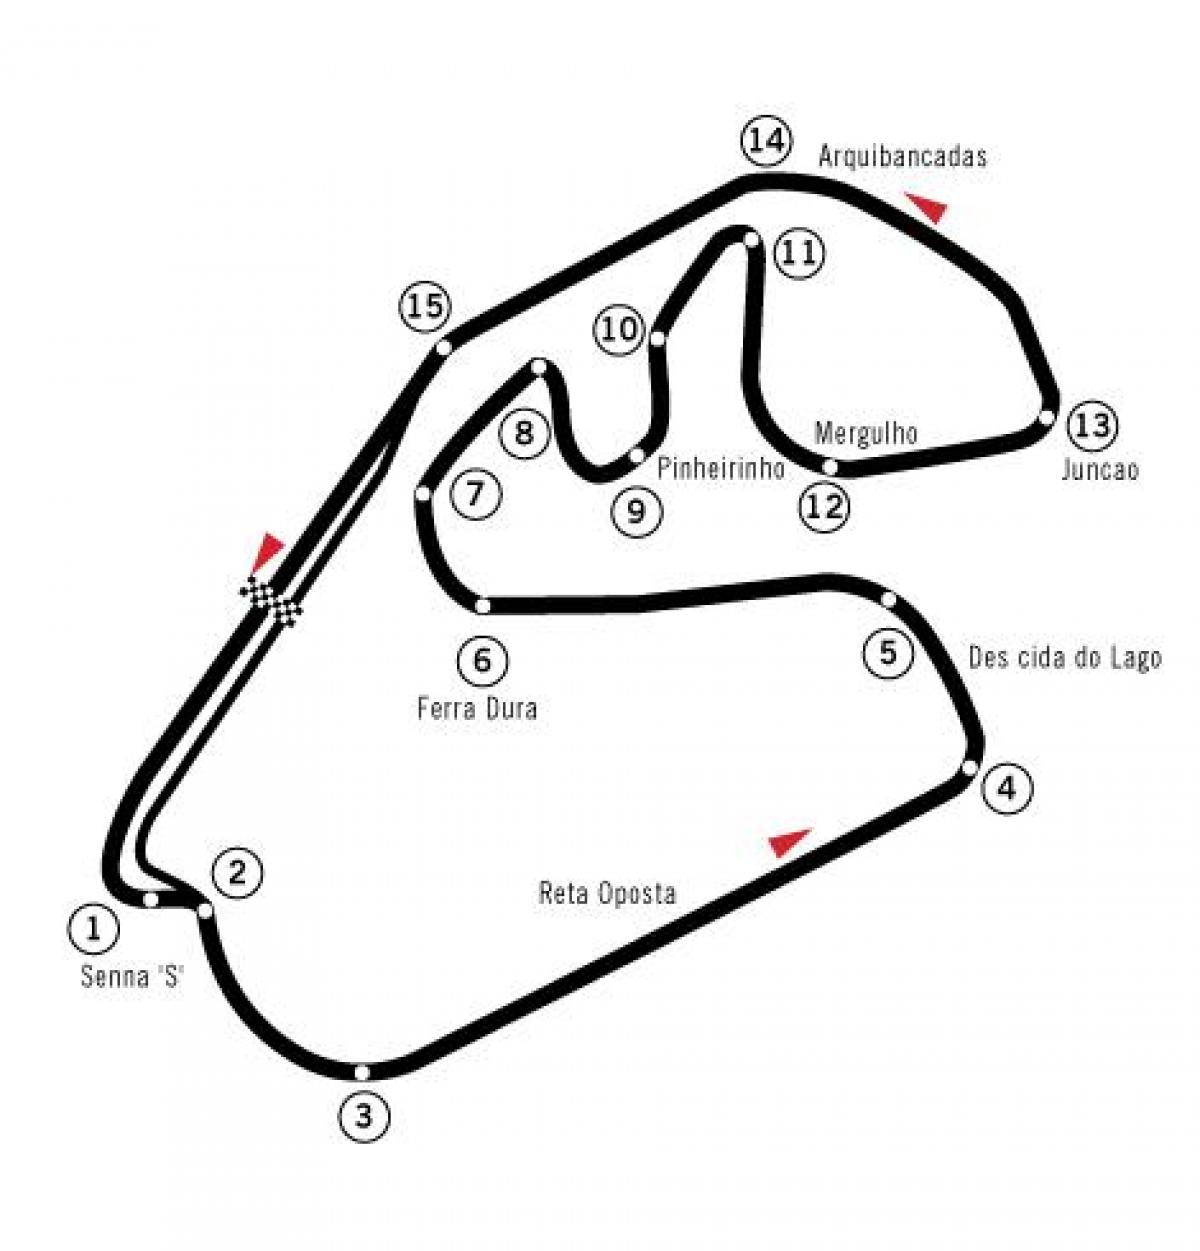 Žemėlapis Autódromo José Carlos Pace